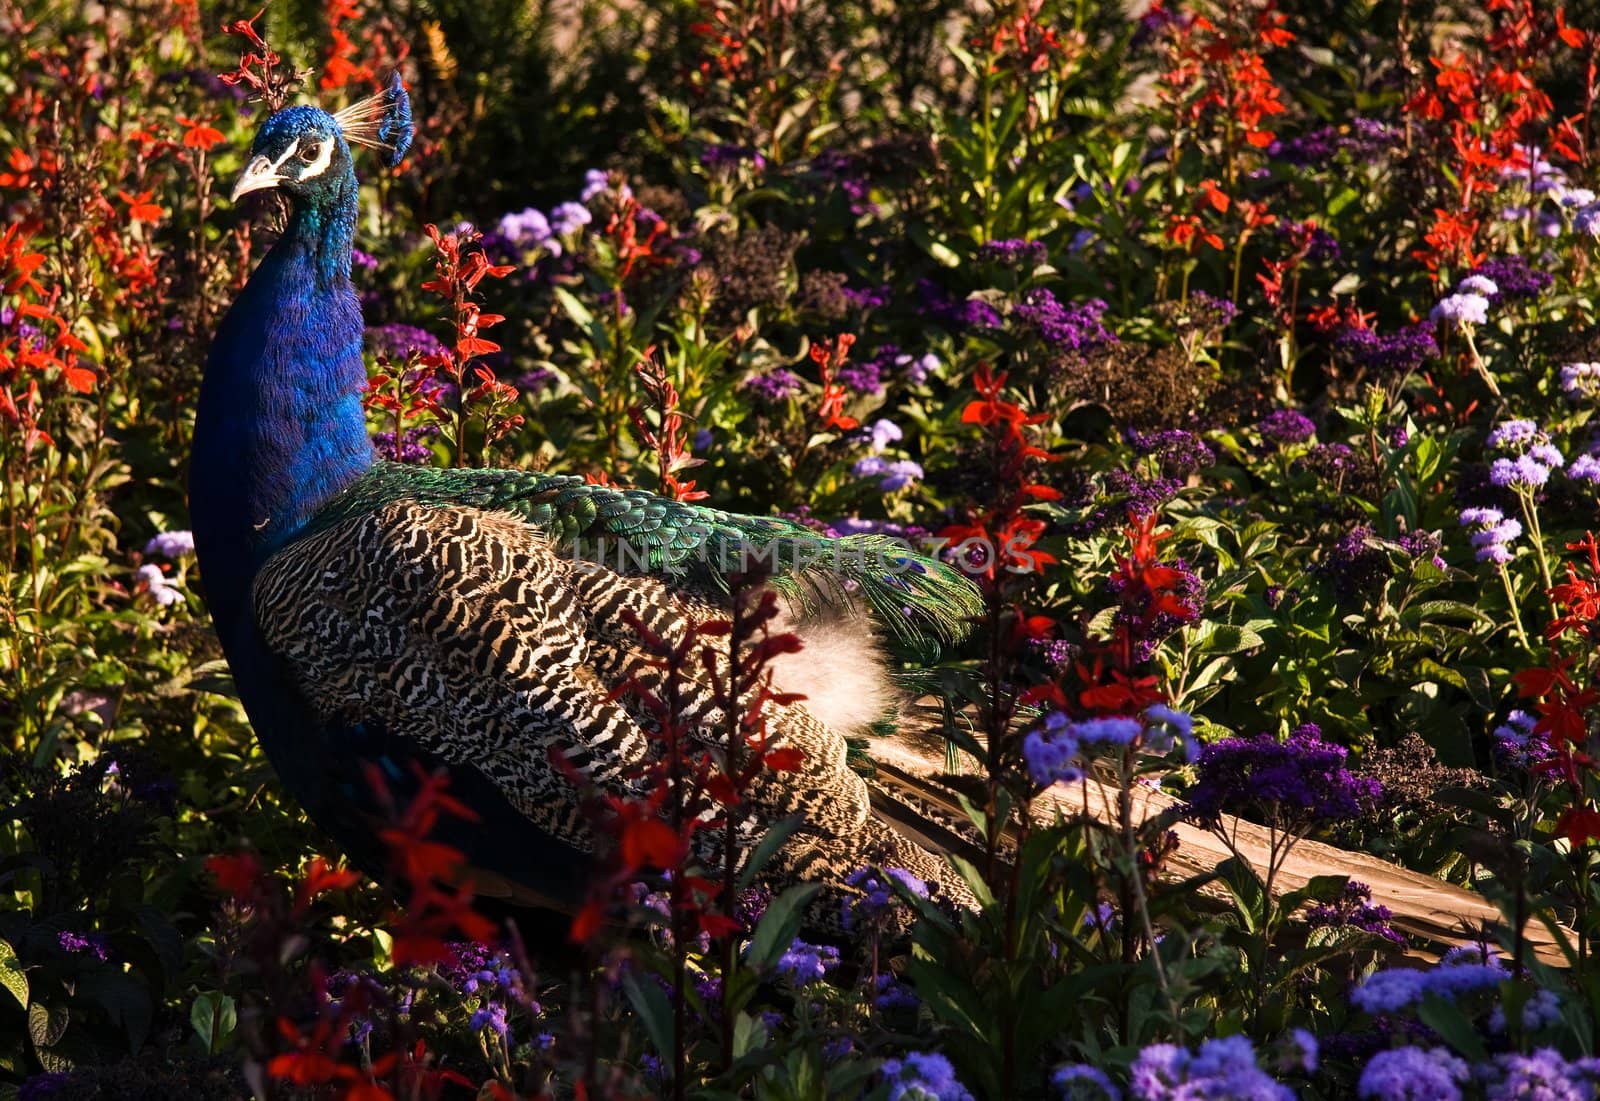 Peacock between flowers by Colette